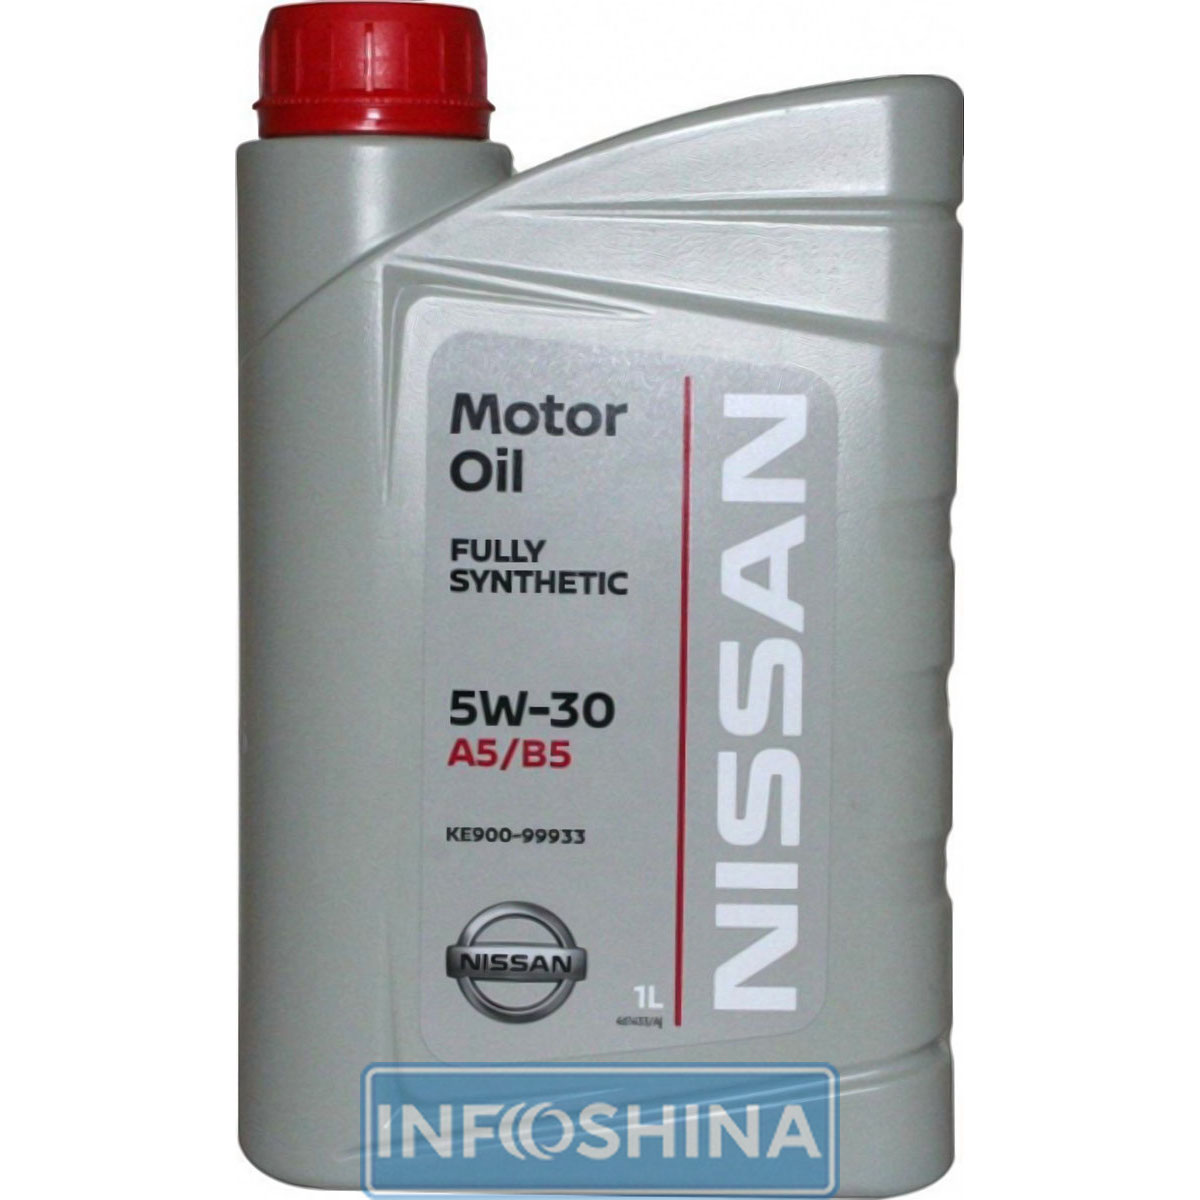 Купить масло Nissan Motor Oil 5W-30 A5/B5 (1л)